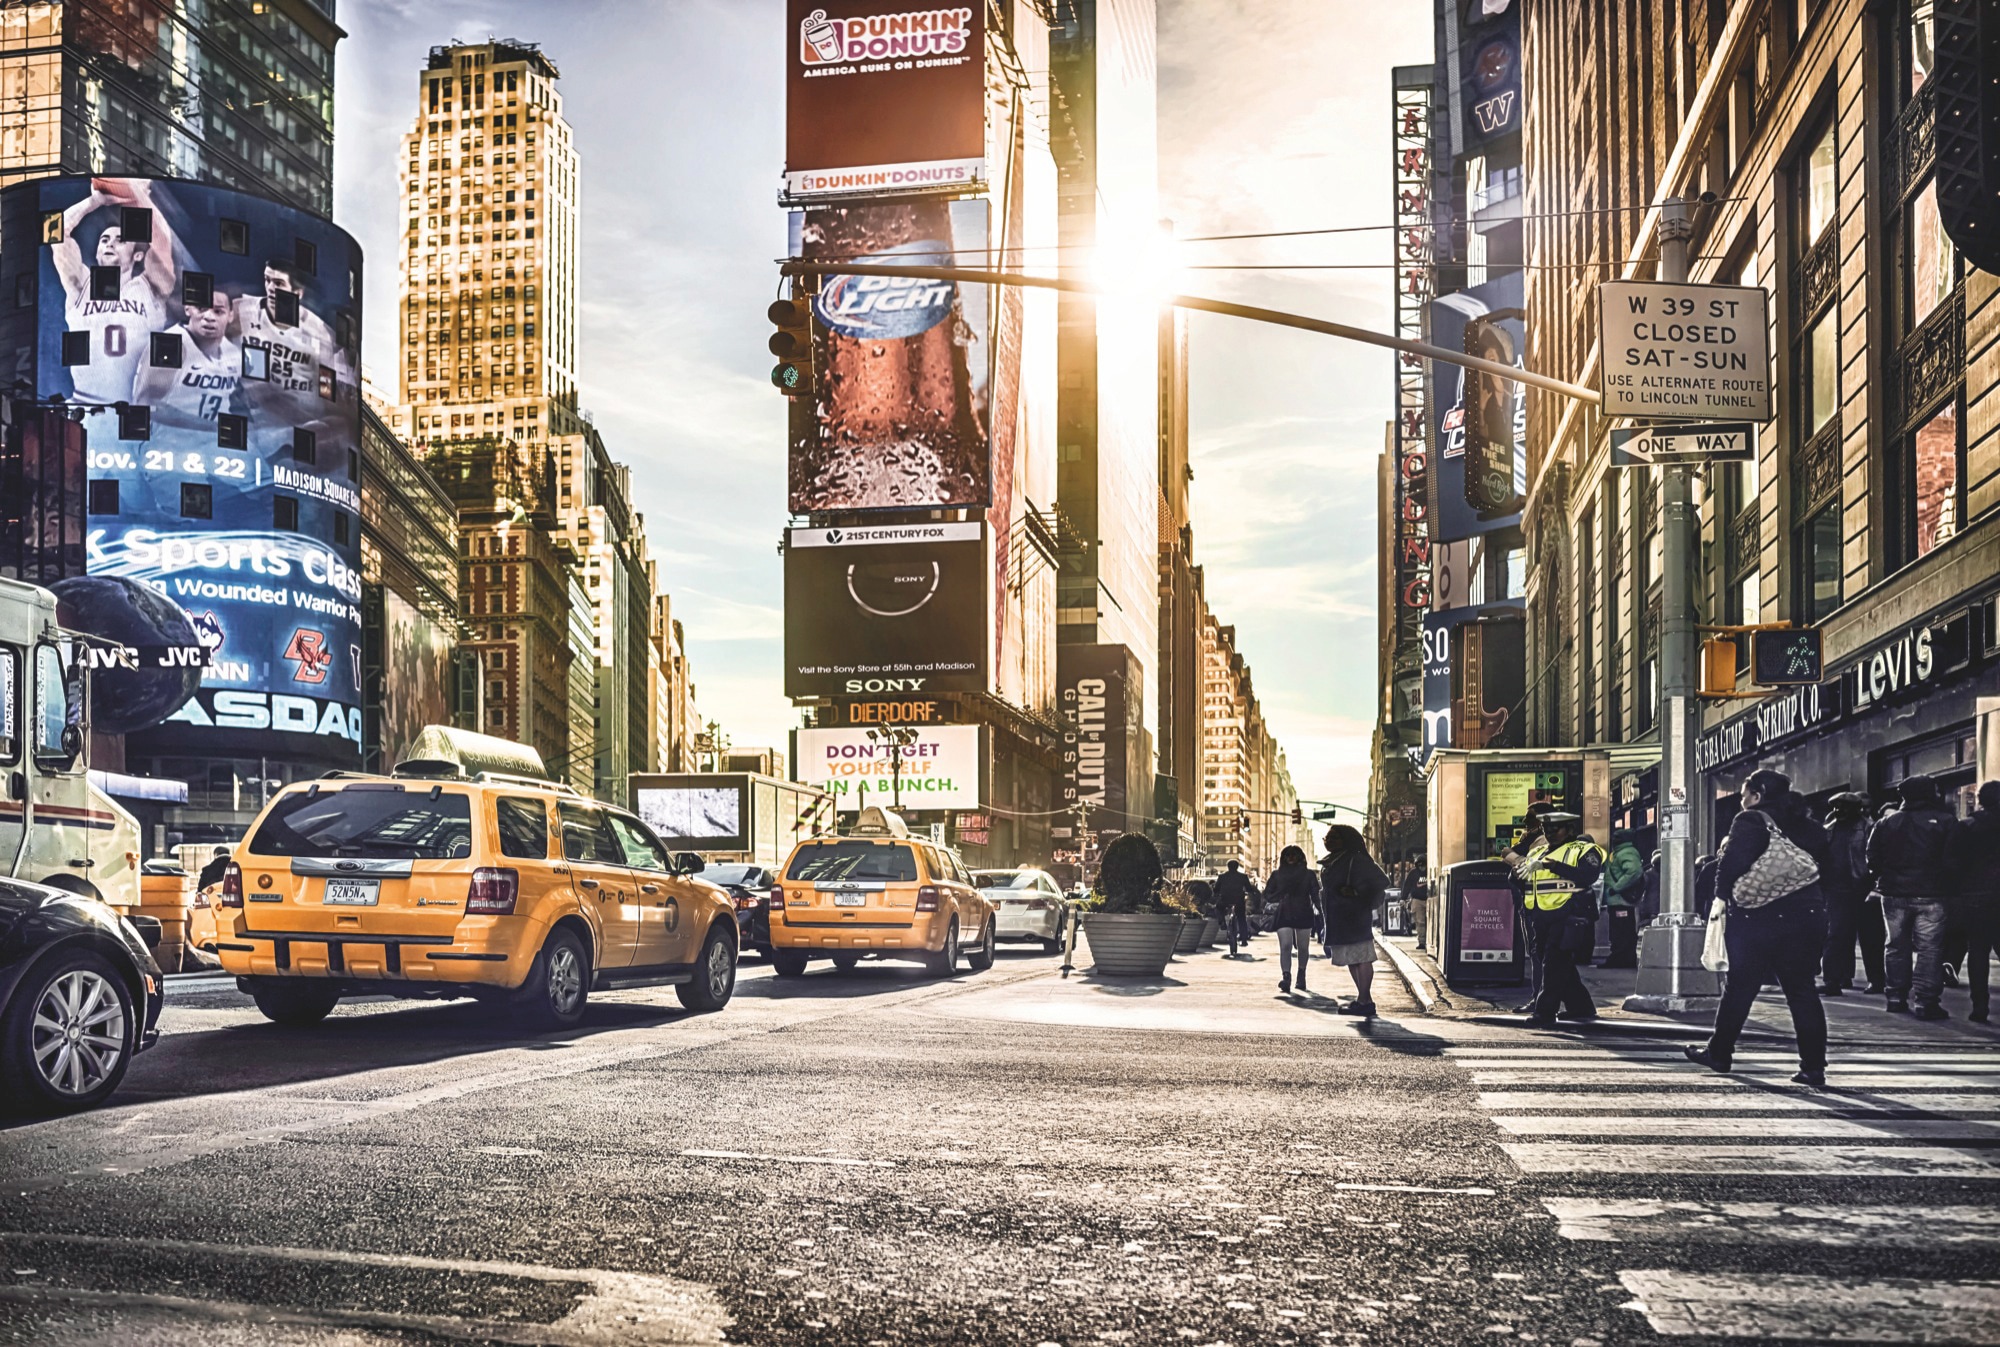 Vliestapete »Times Square«, 368x248 cm (Breite x Höhe), inklusive Kleister